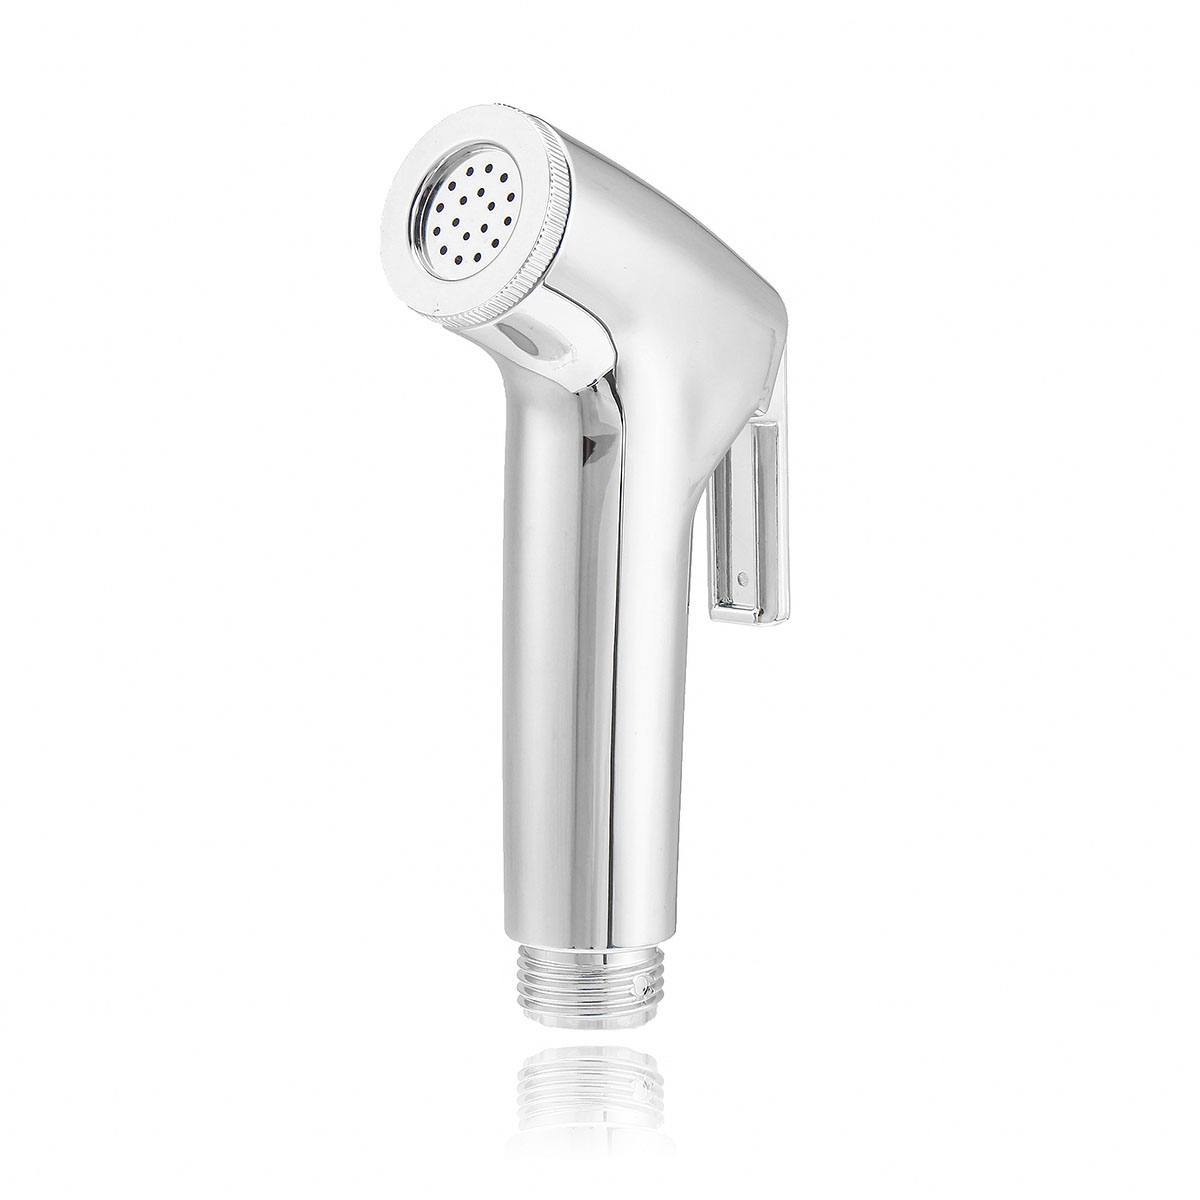 

ABS Handheld Bathroom Bidet Portable Pressurized Toilet Bidet Spray Shower Head Water Nozzle Sprayer Cloth Diaper Sprayer for Personal Hygiene